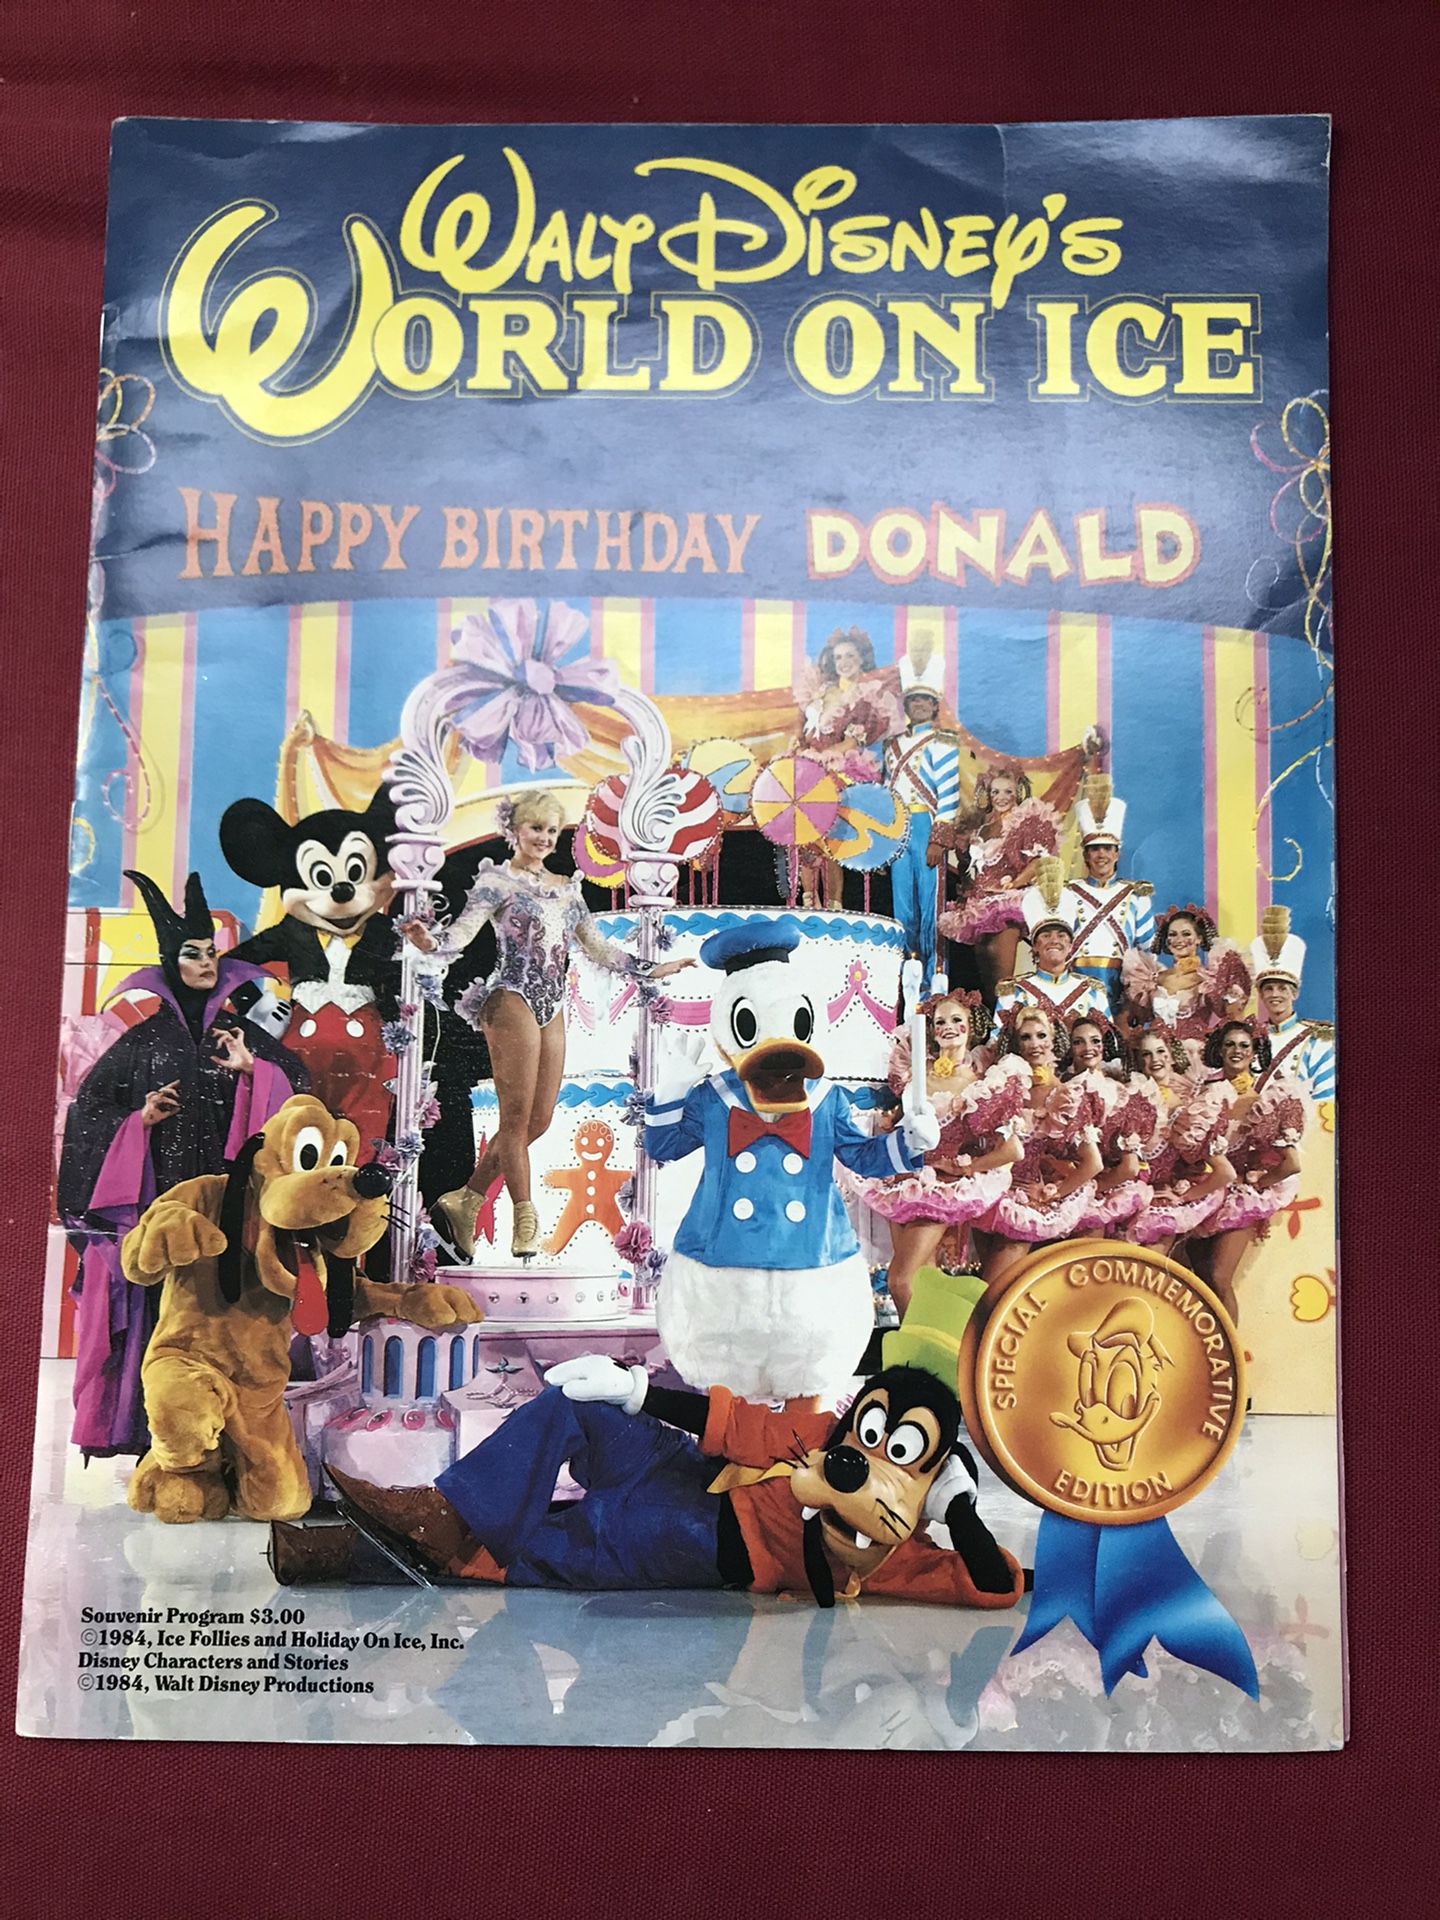 Walt Disney's World on Ice Happy Birthday Donald 1984 Souvenir Program